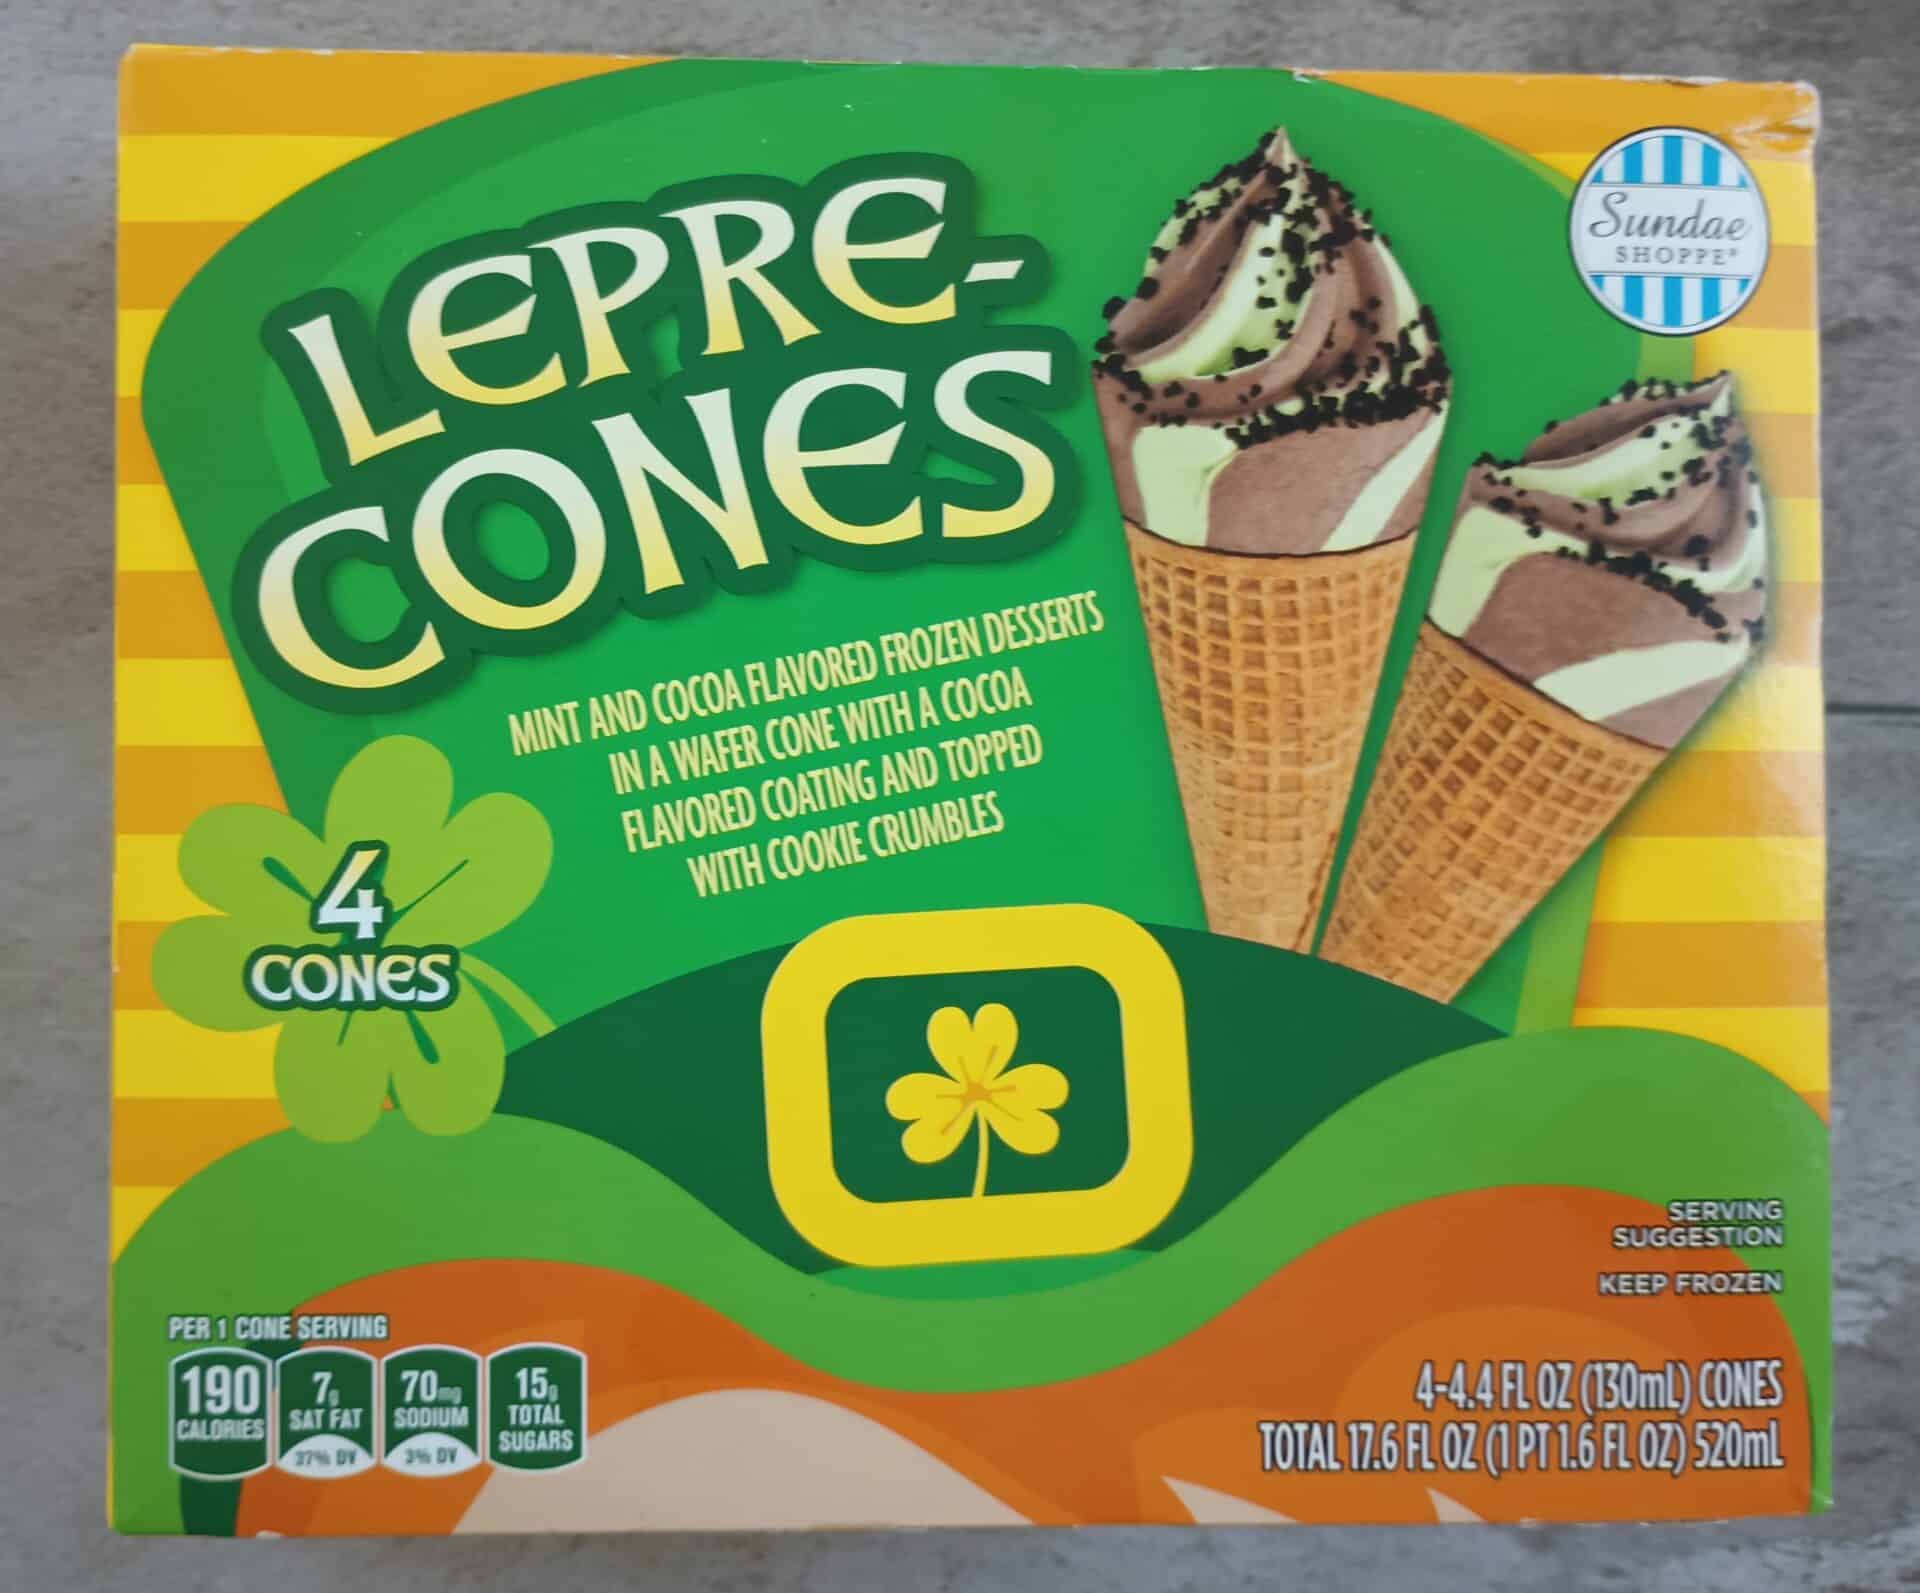 Sundae Shoppe Lepre-Cones